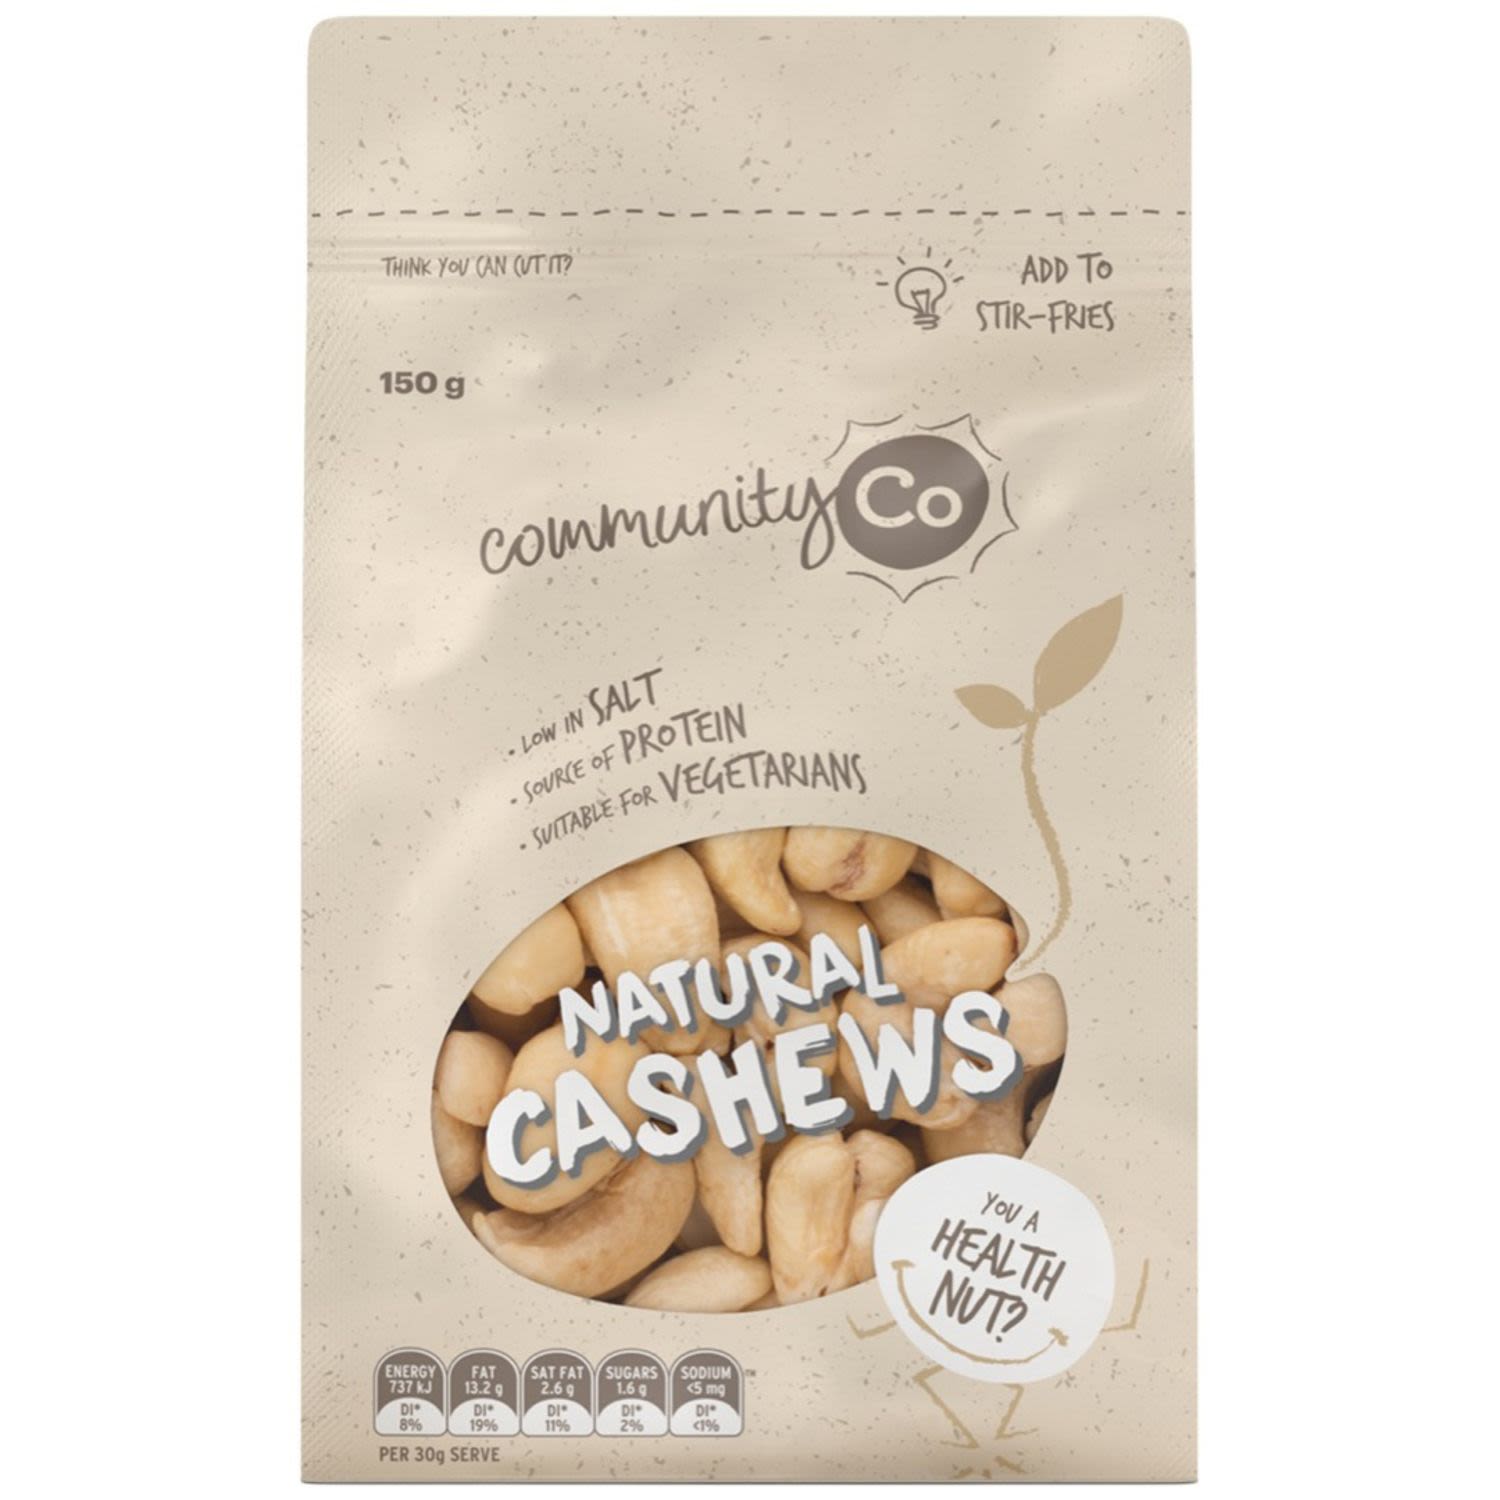 Community Co Raw Cashews, 150 Gram